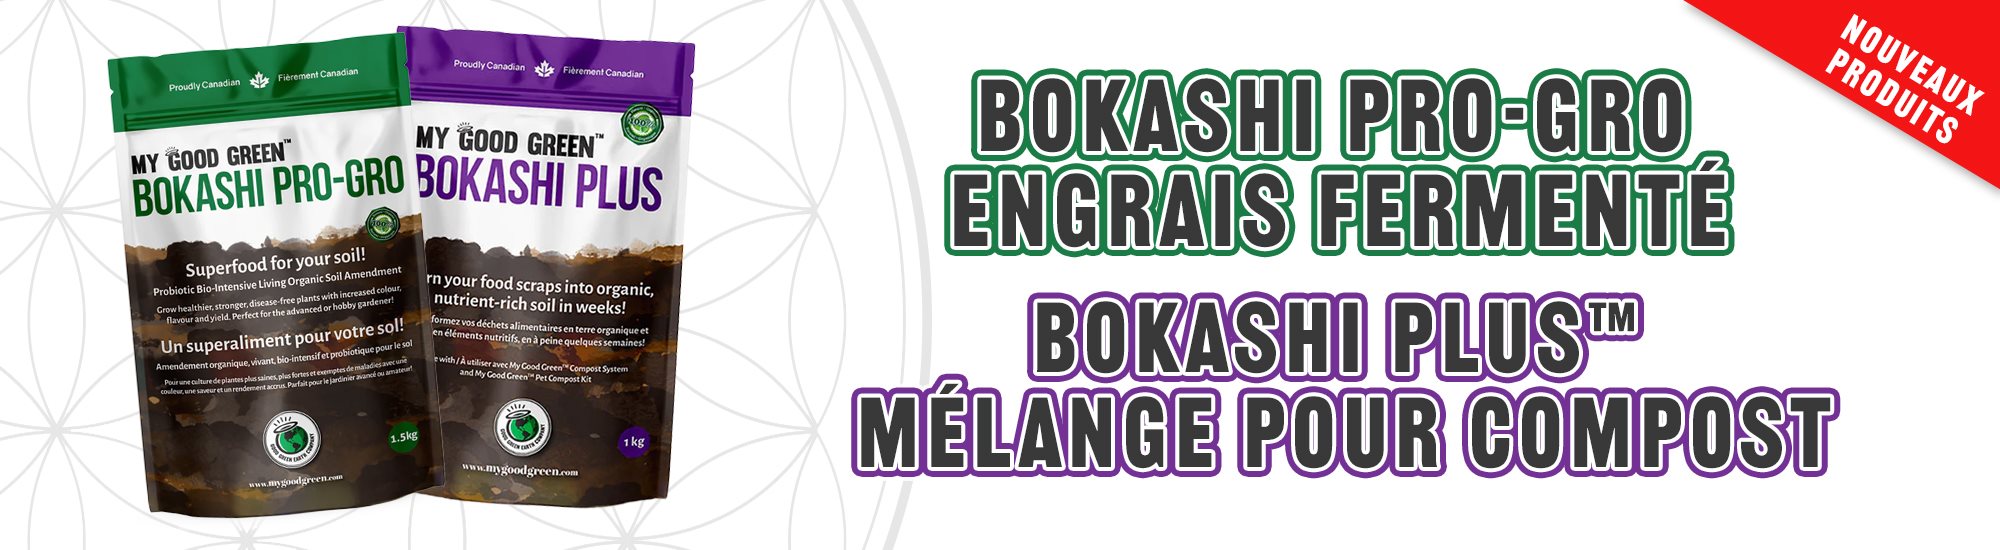 bokashi web banner_FR